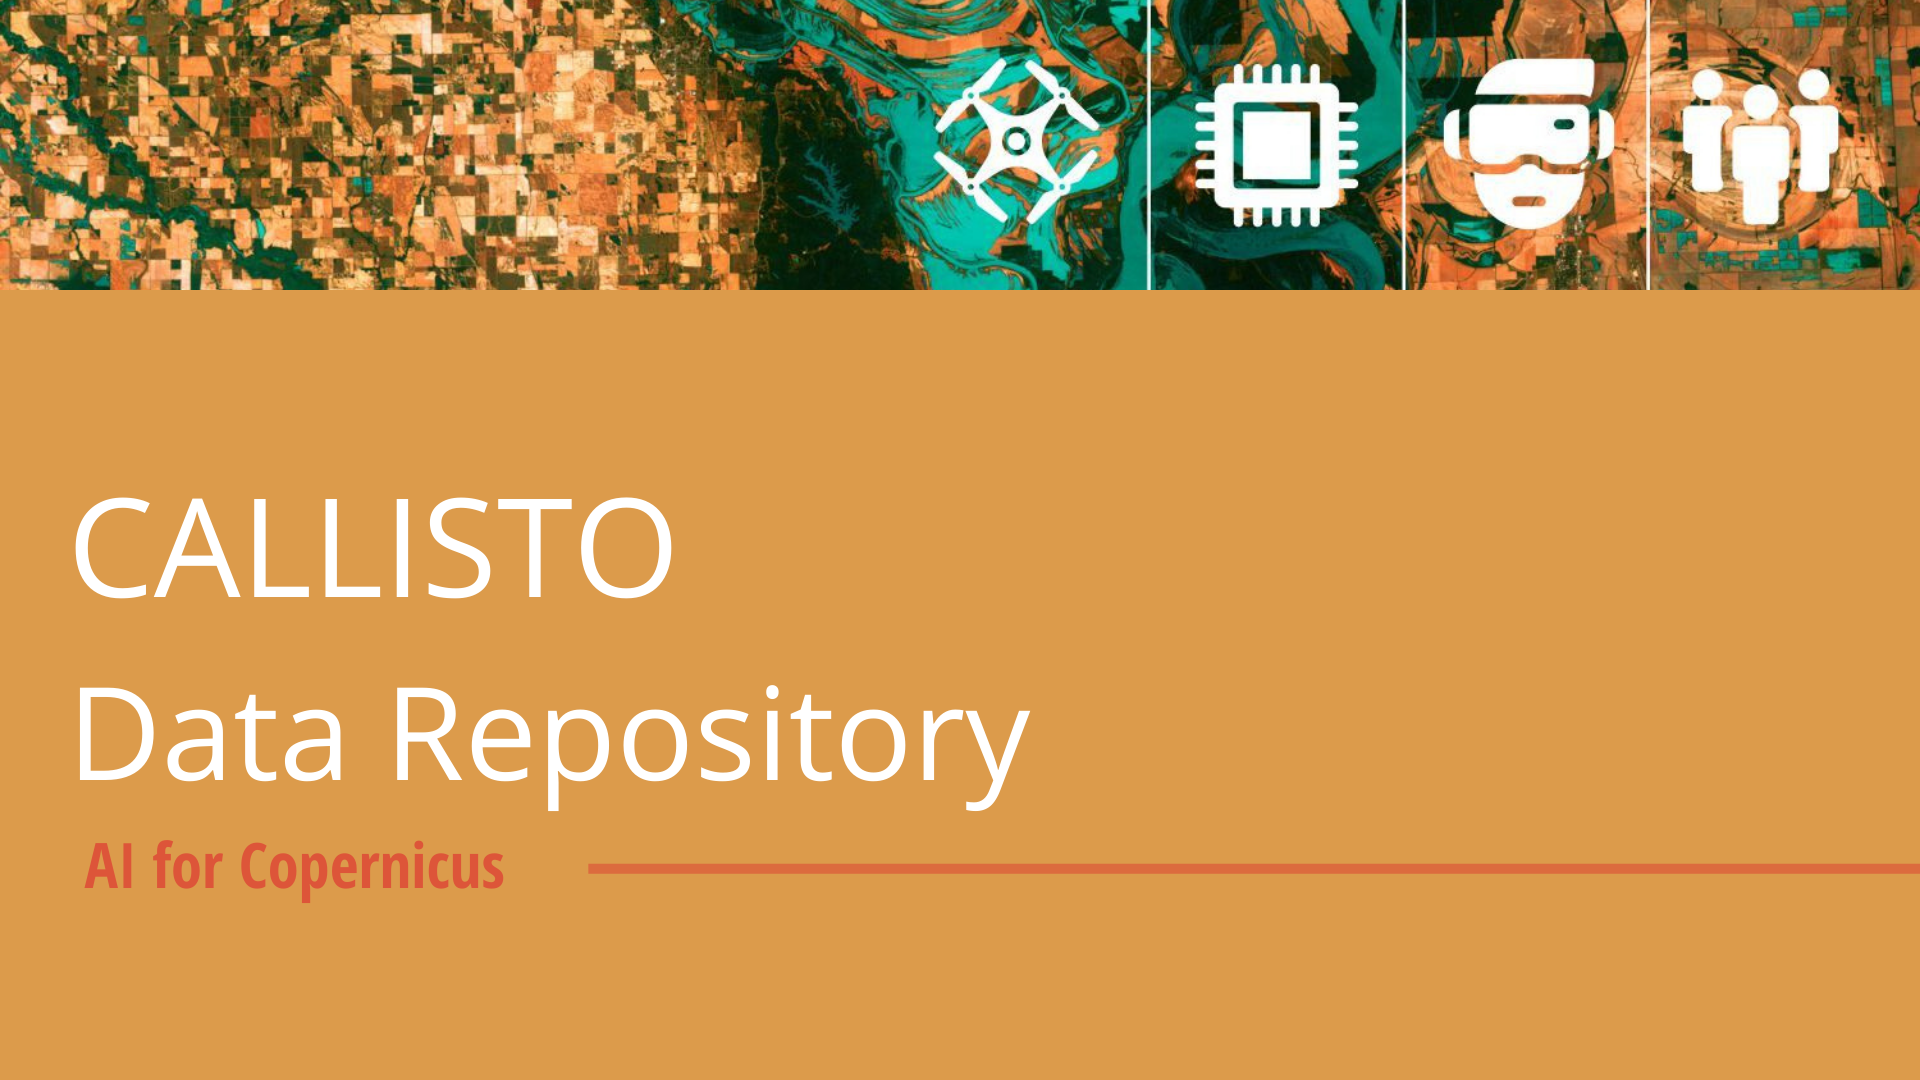 Callisto Data Repository Image